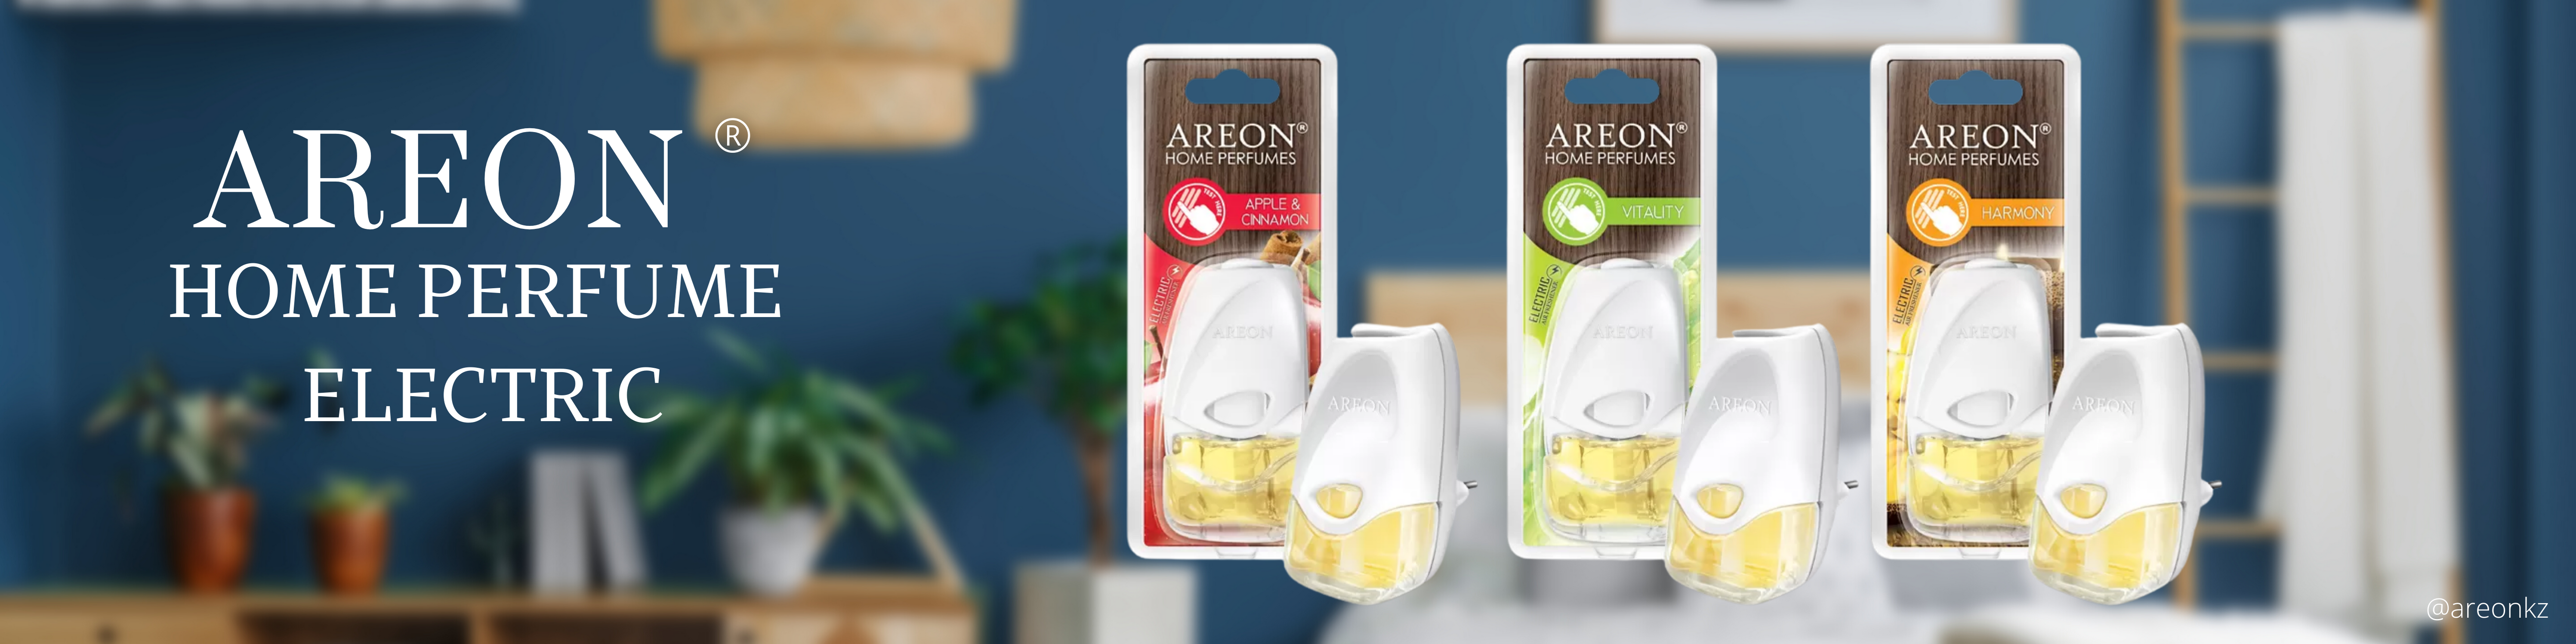 Areon Home Perfume Electric